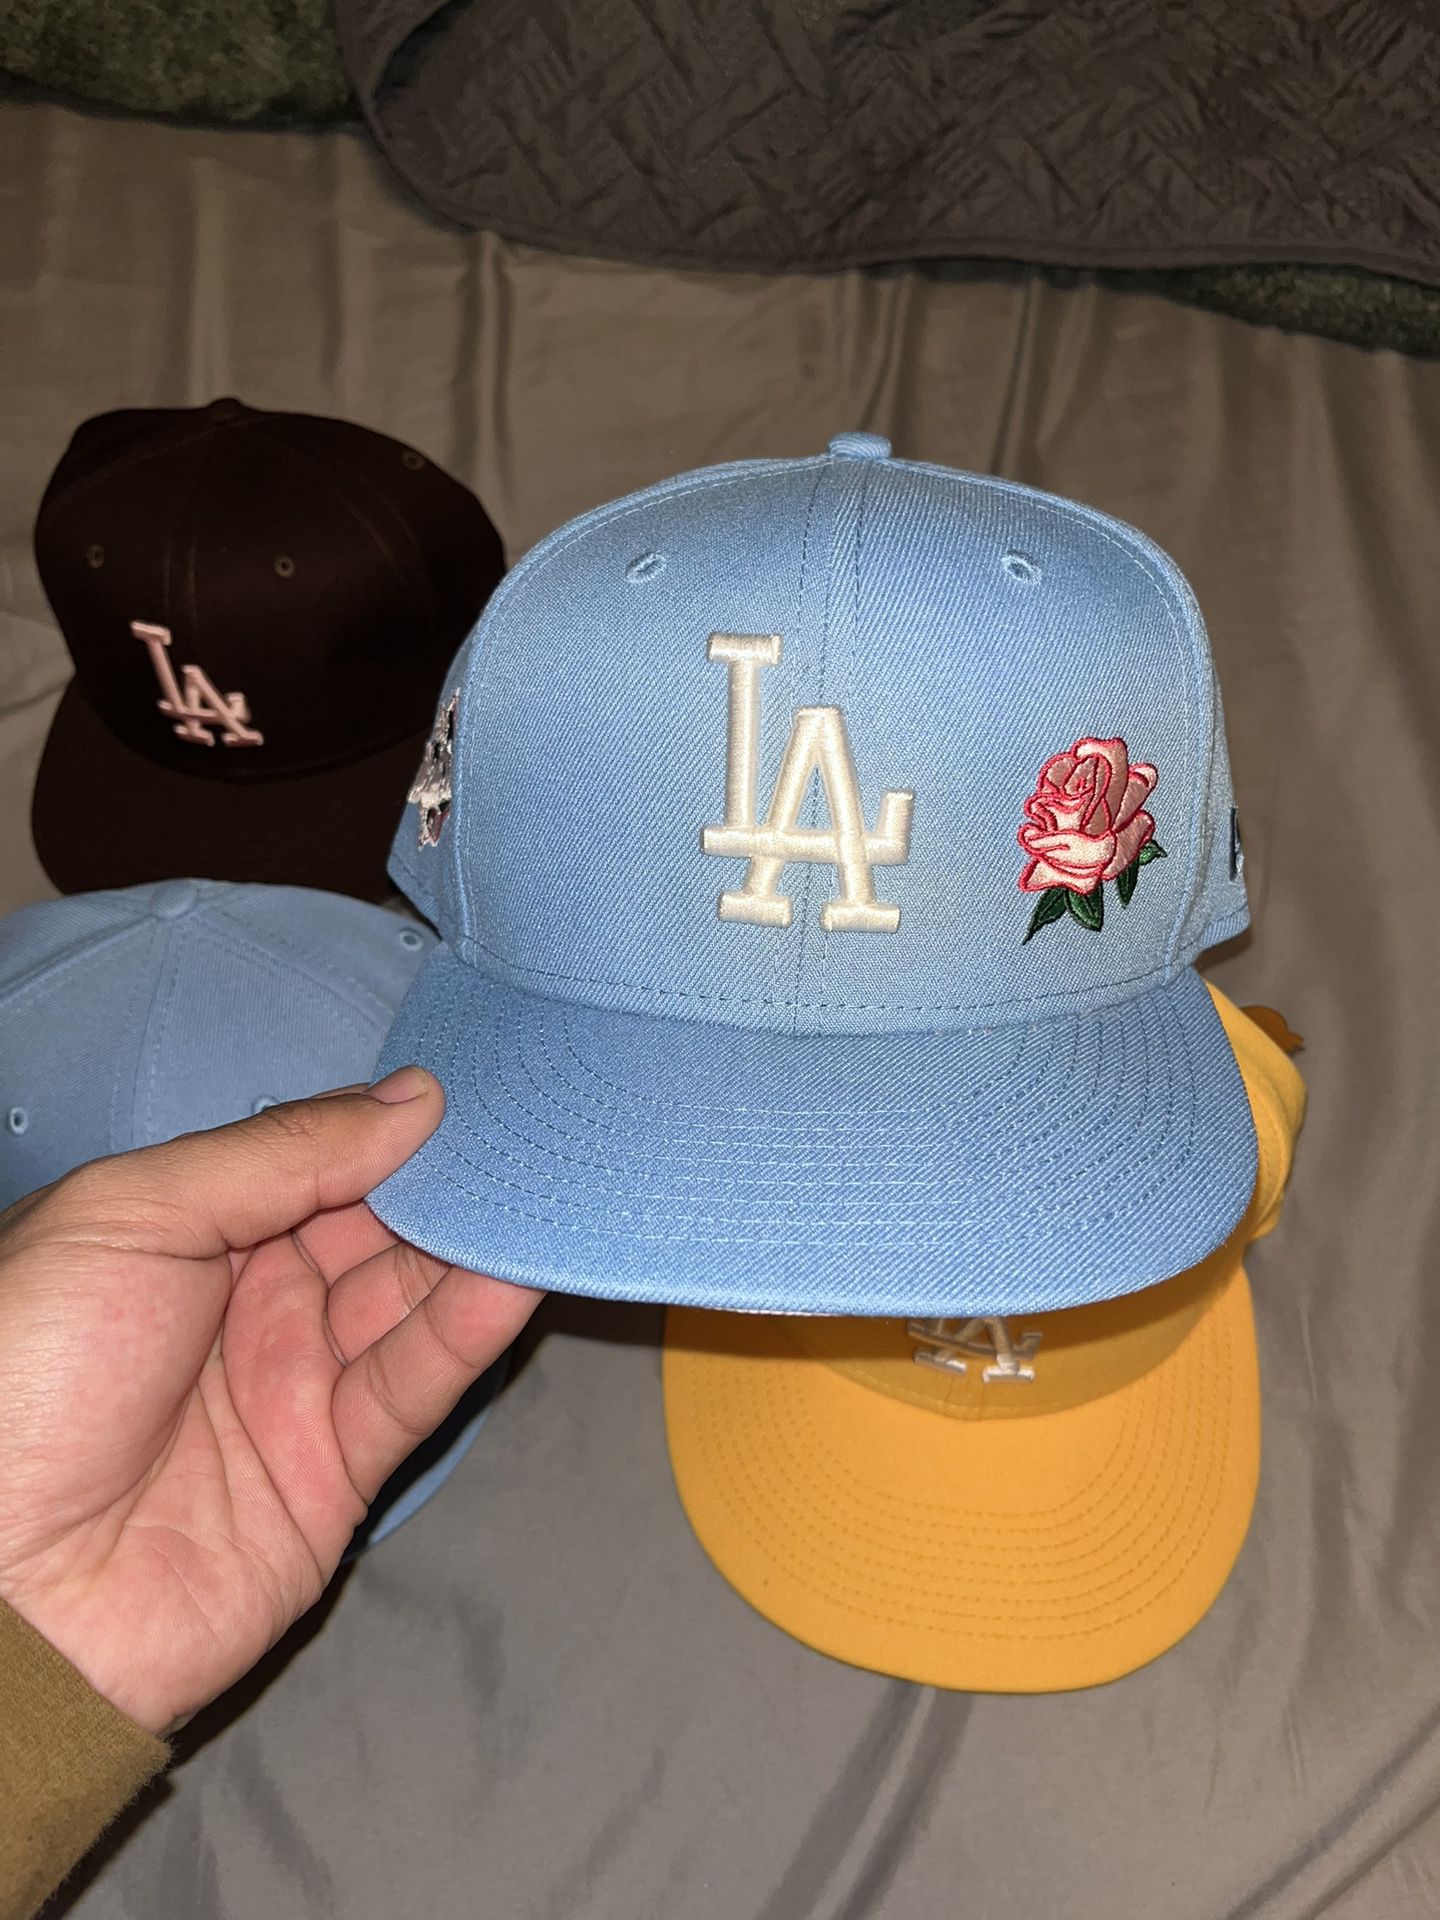 Philadelphia 76ers Hat Size 7 5/8 for Sale in Bellerose, NY - OfferUp